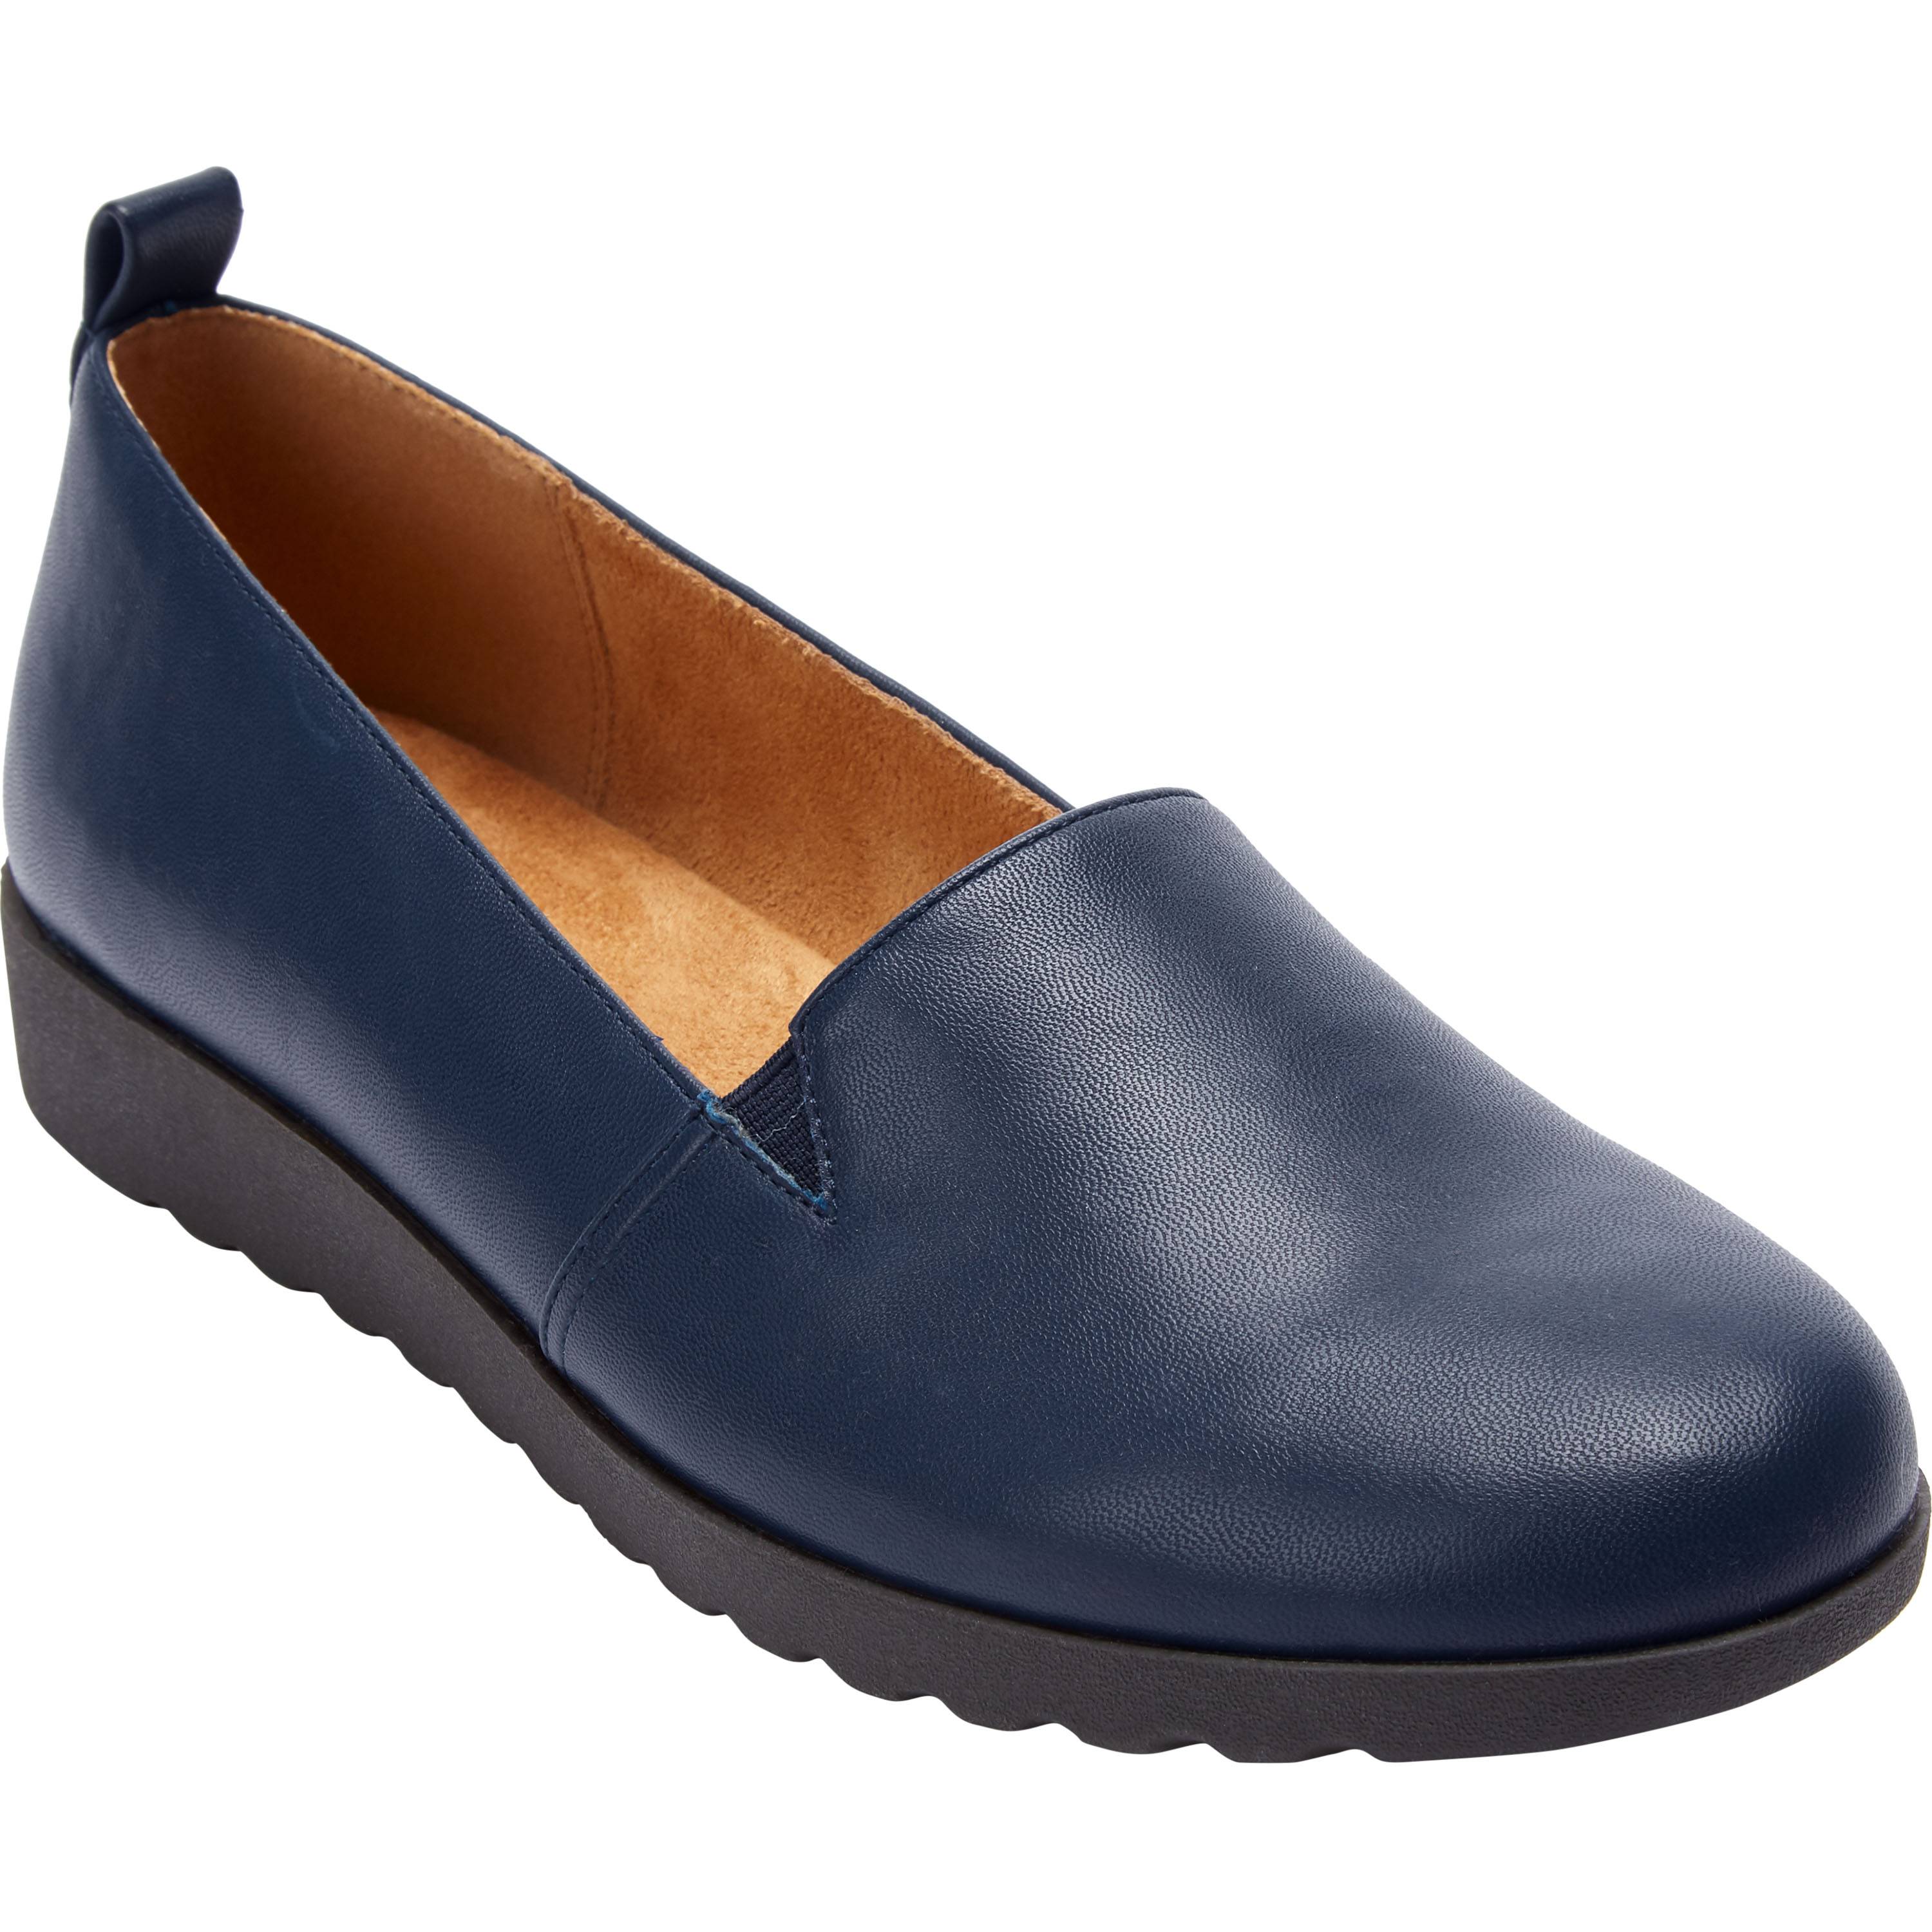 Comfortview Wide Width June Flat Women's Slip-On Shoes - 9     WW, Navy Blue - image 1 of 7